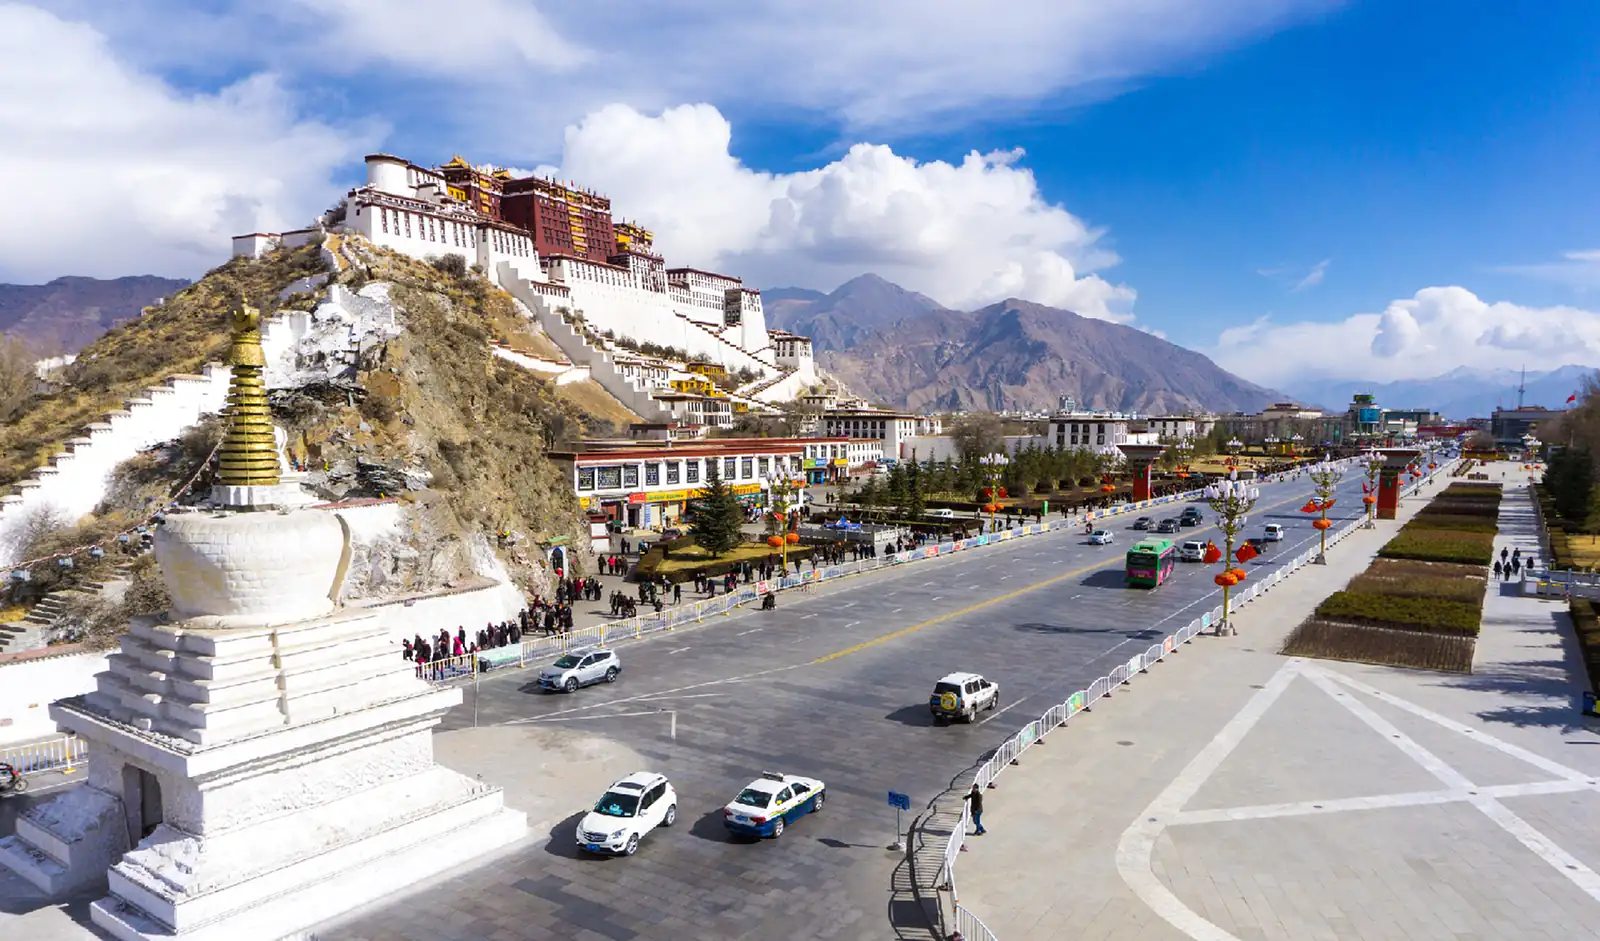 The Potala Palace - Former residence of Dalai Lamas